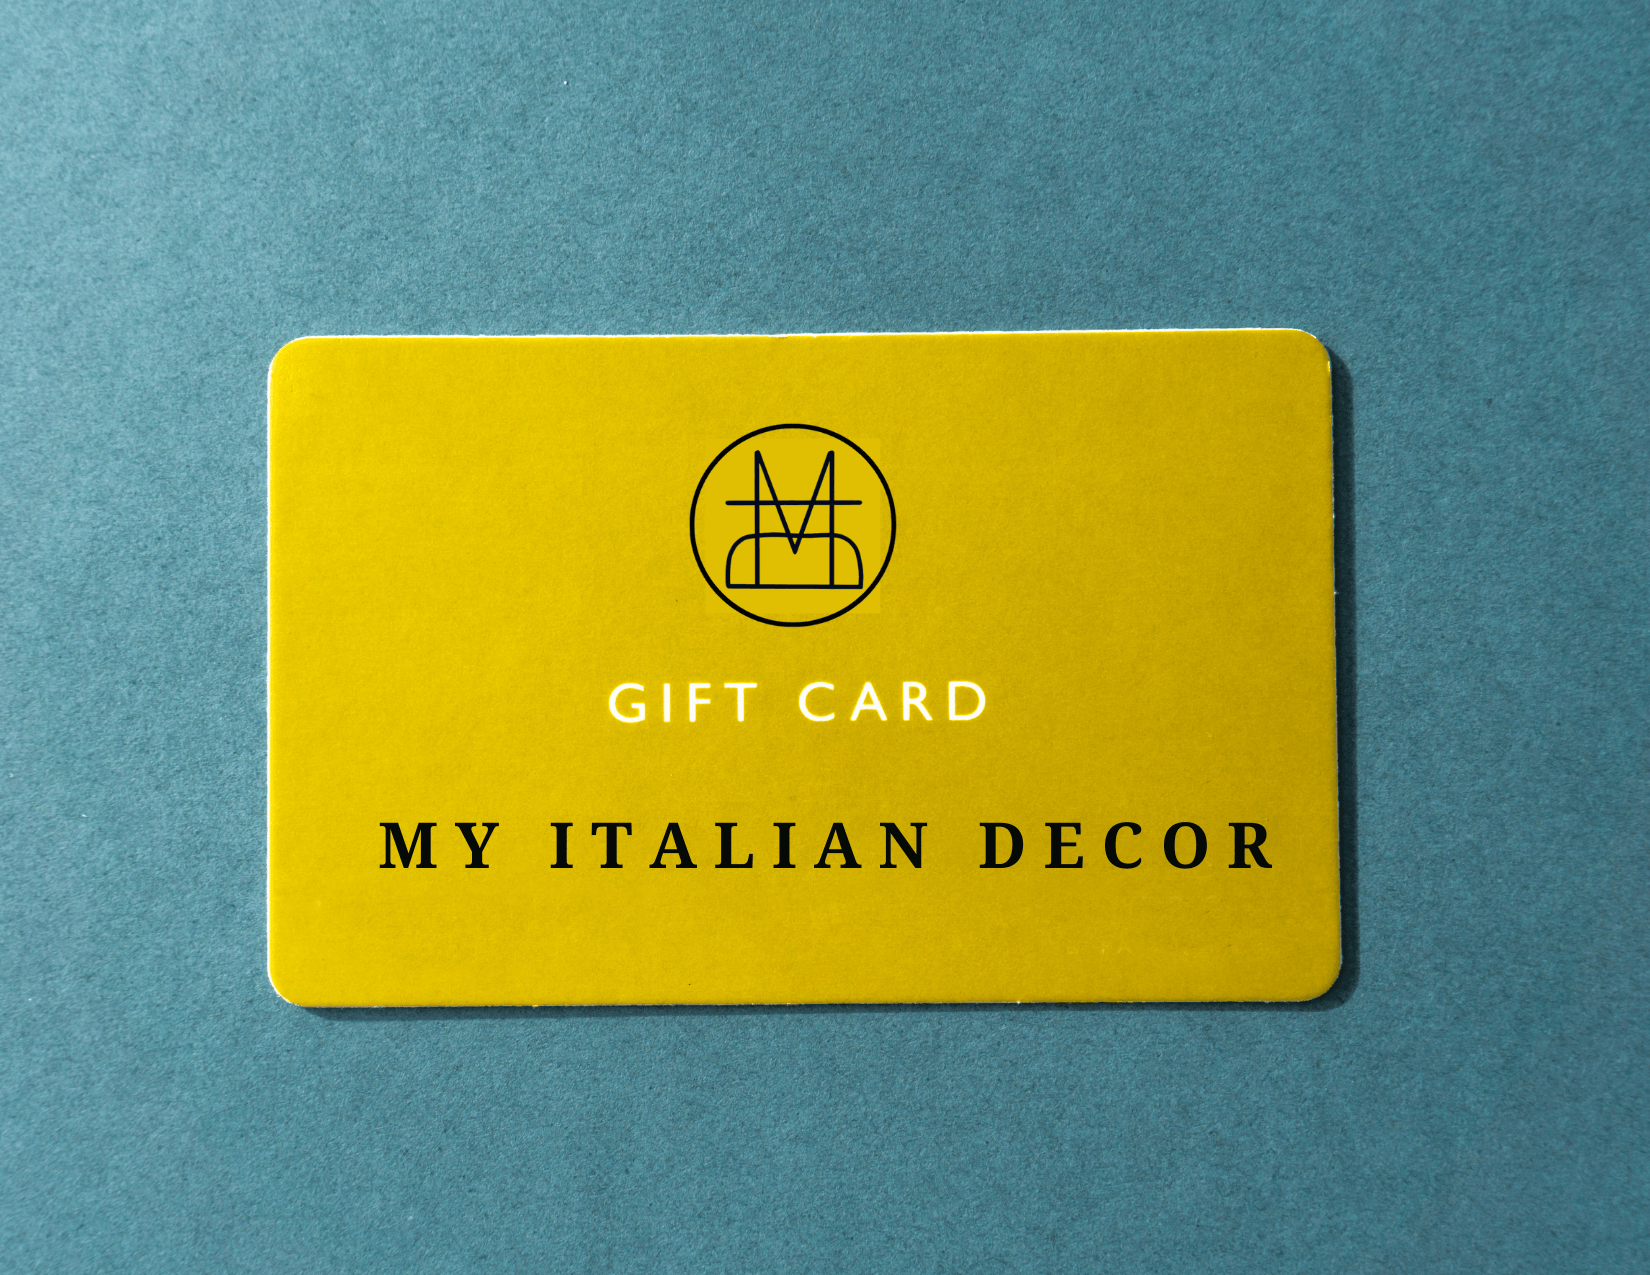 My Italian Decor Gift Card - MyItalianDecor